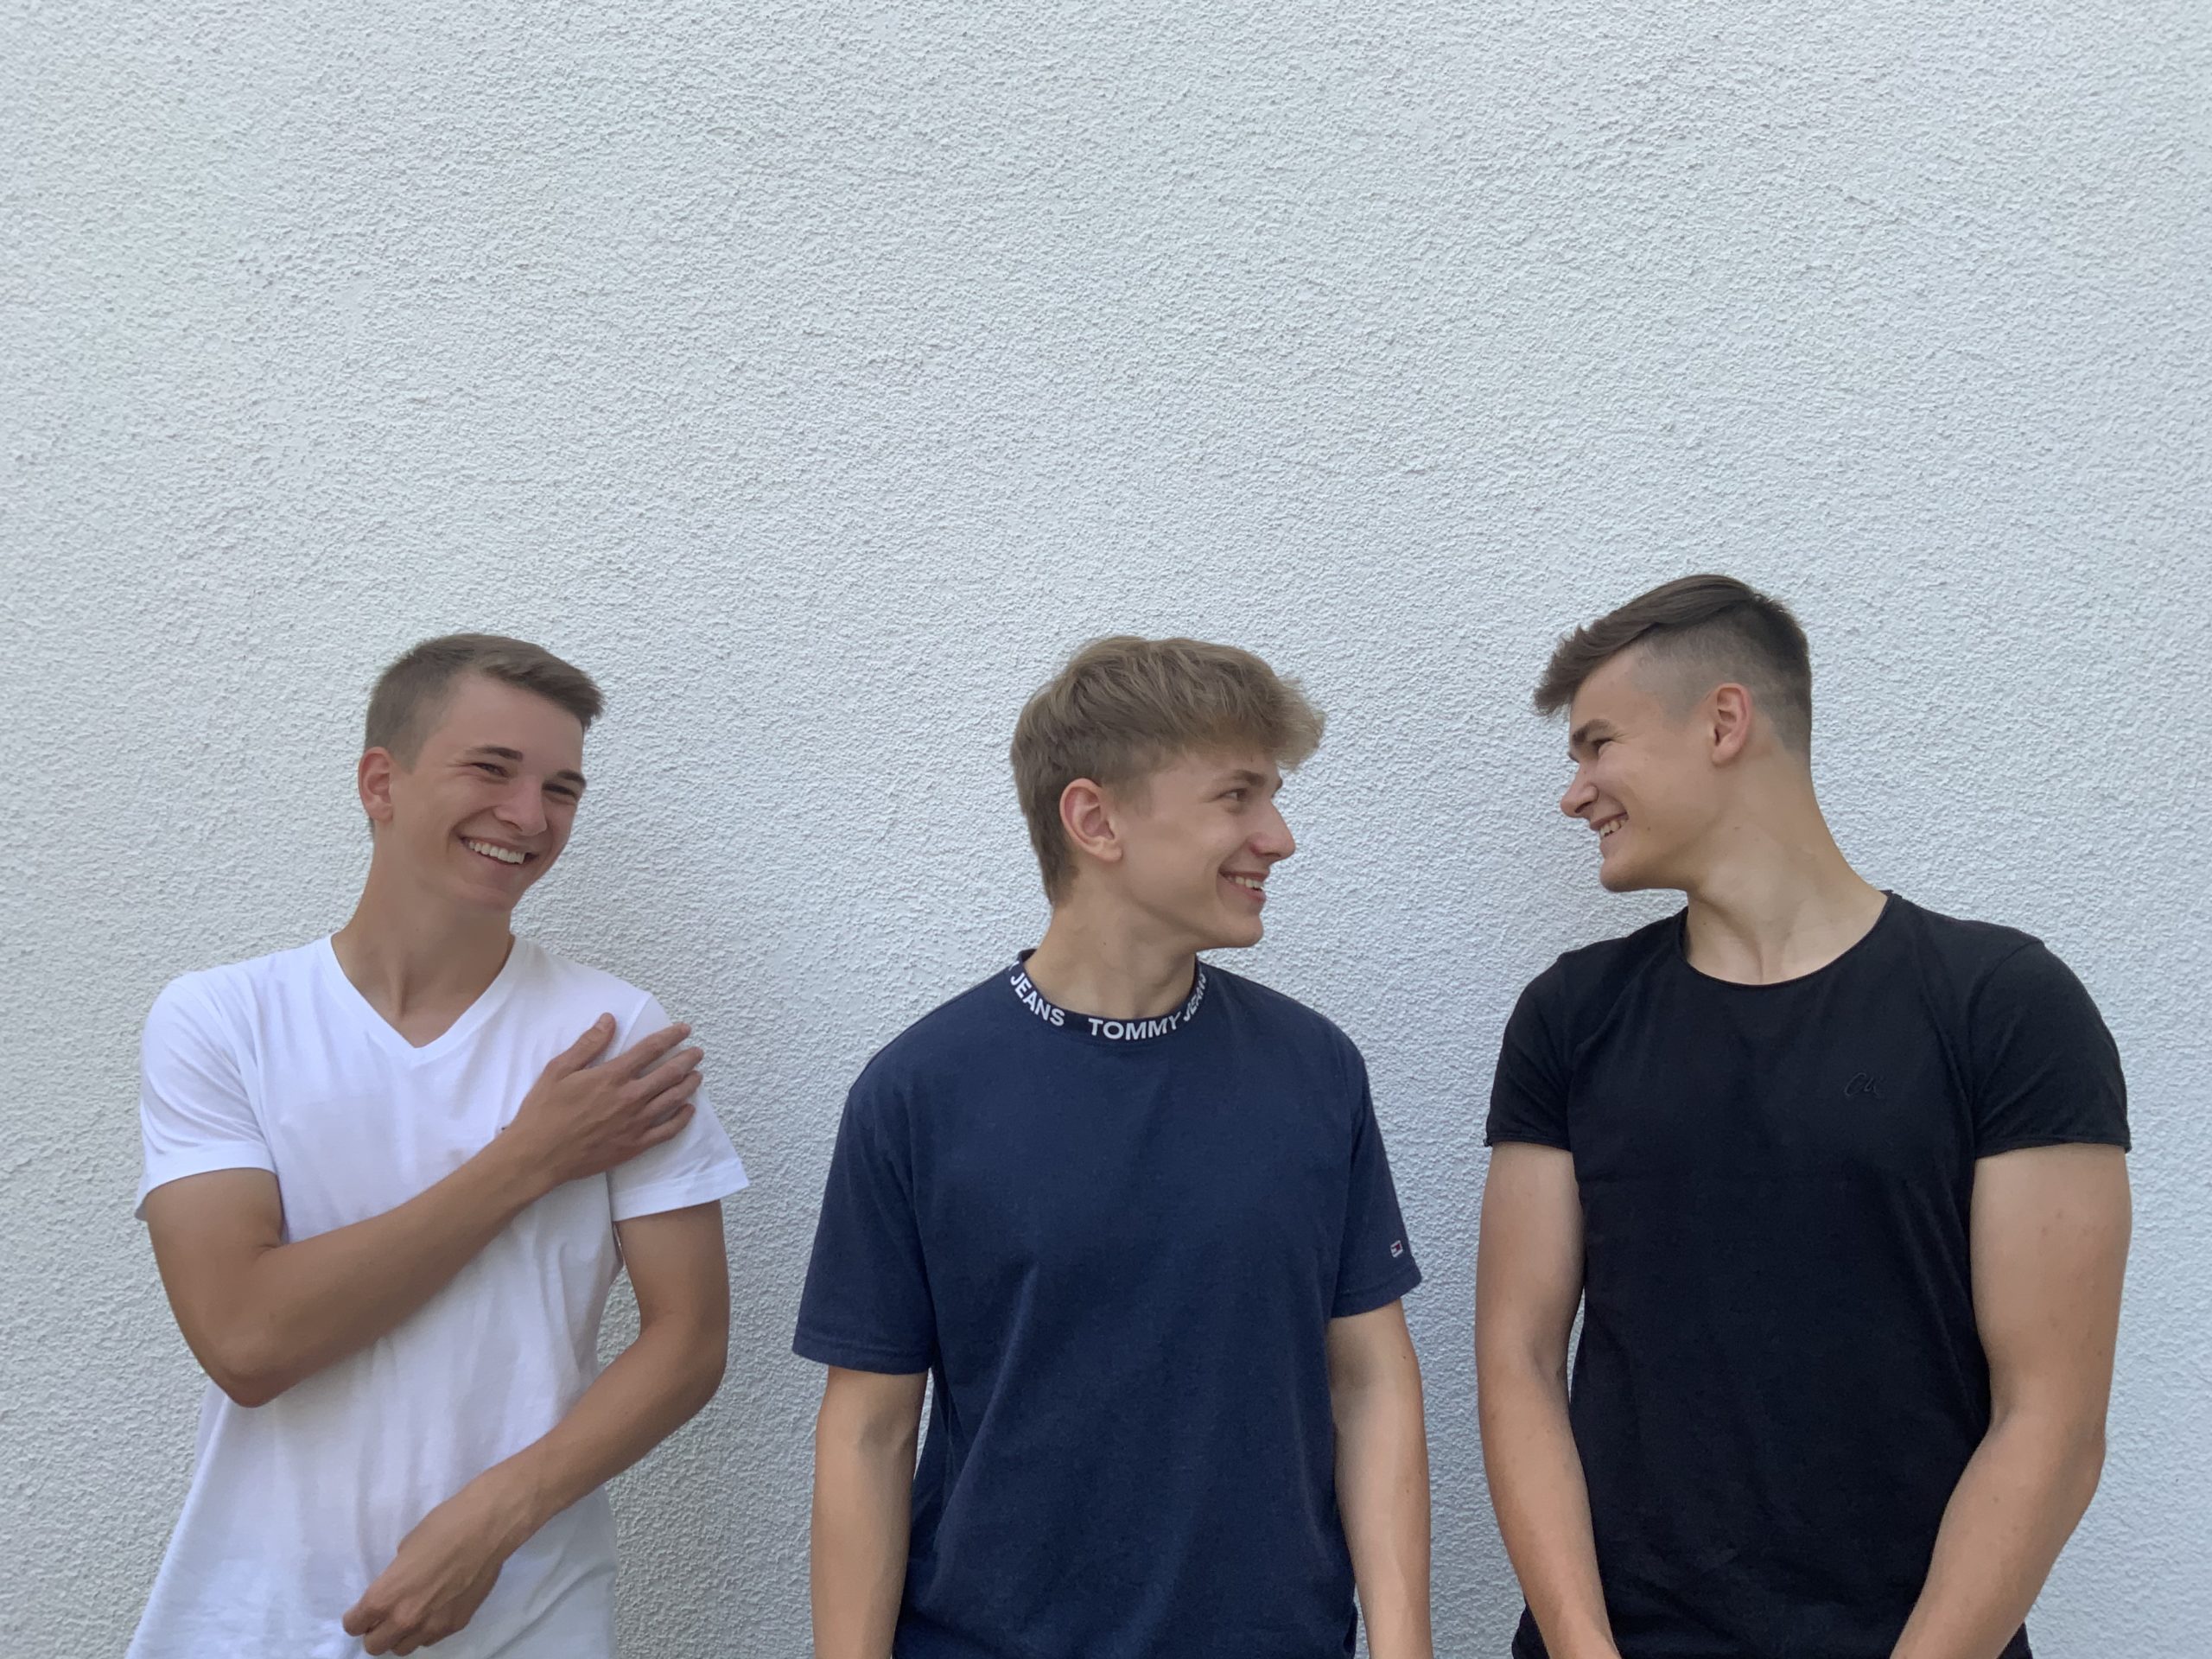 Gruppenfoto drei Jungs